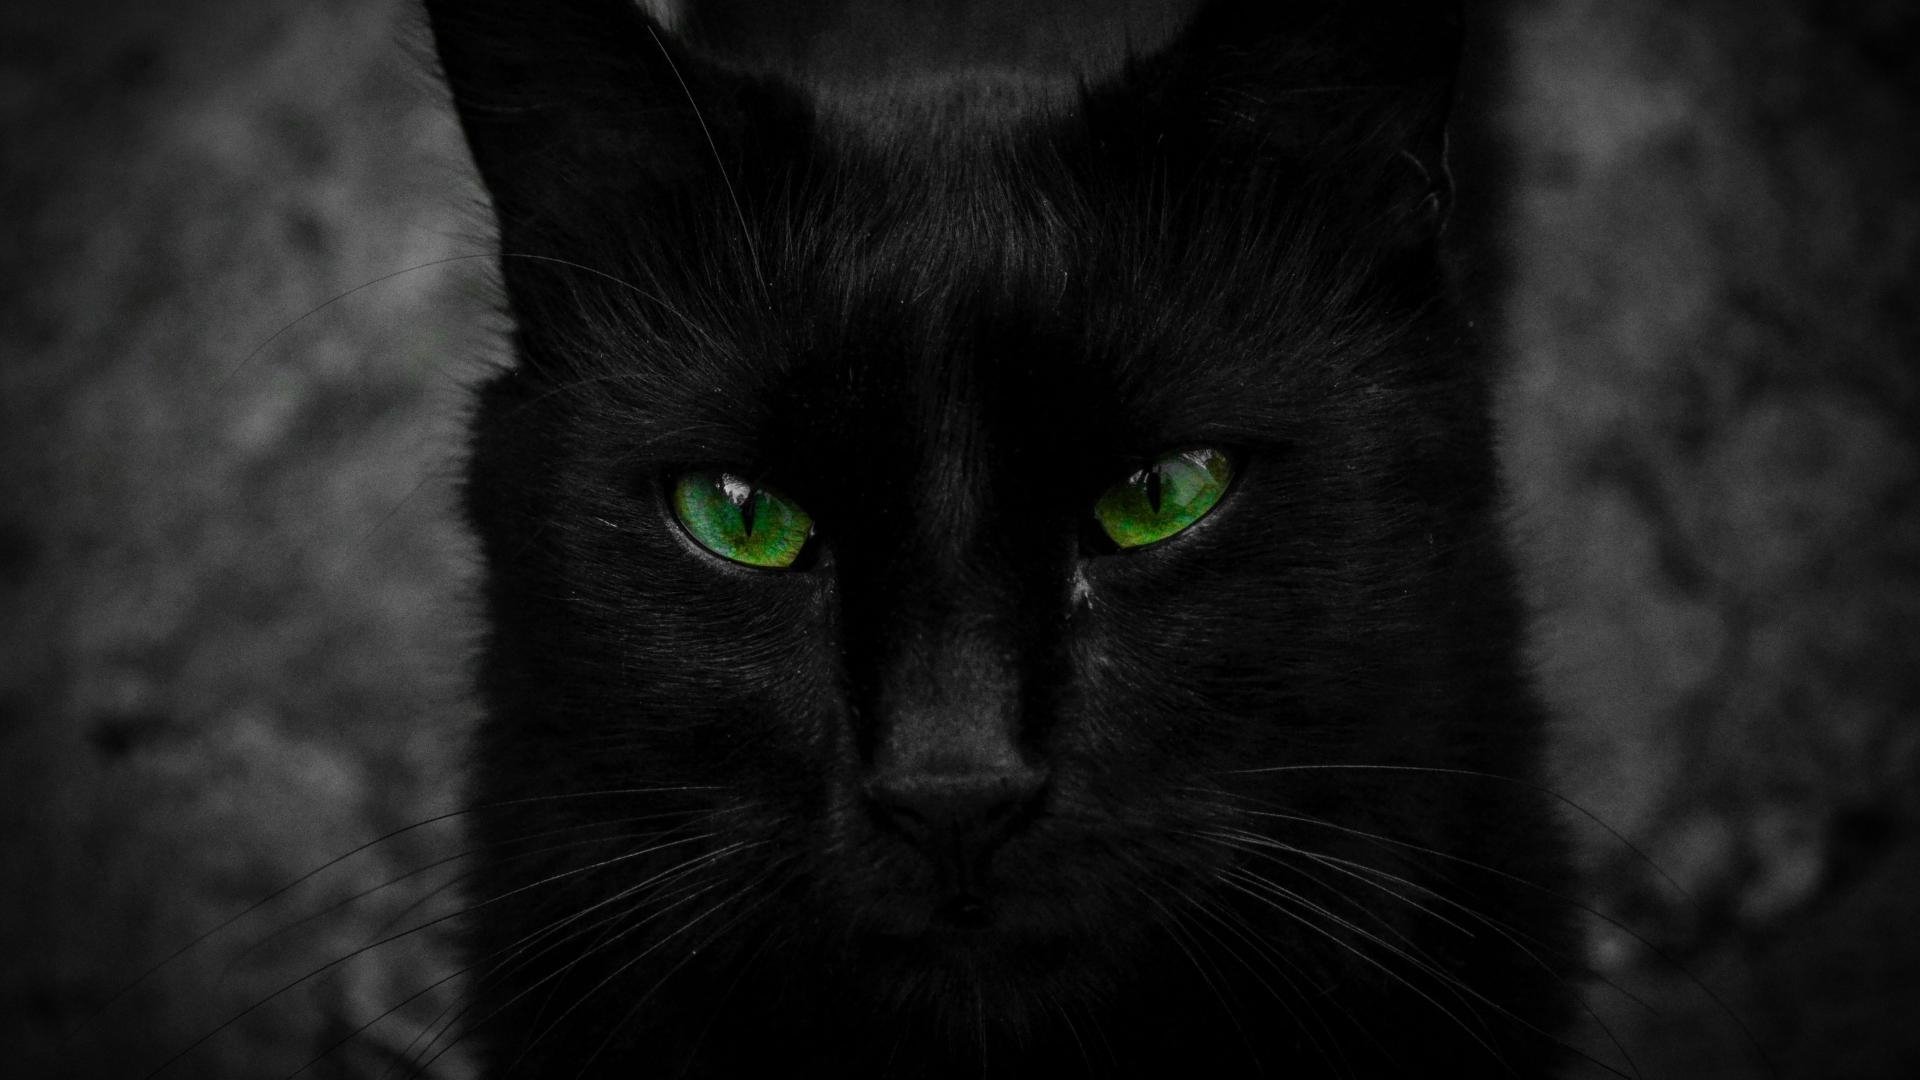 Green Eyed Black Cat HD Wallpaper Background Image 1920x1080 1920x1080